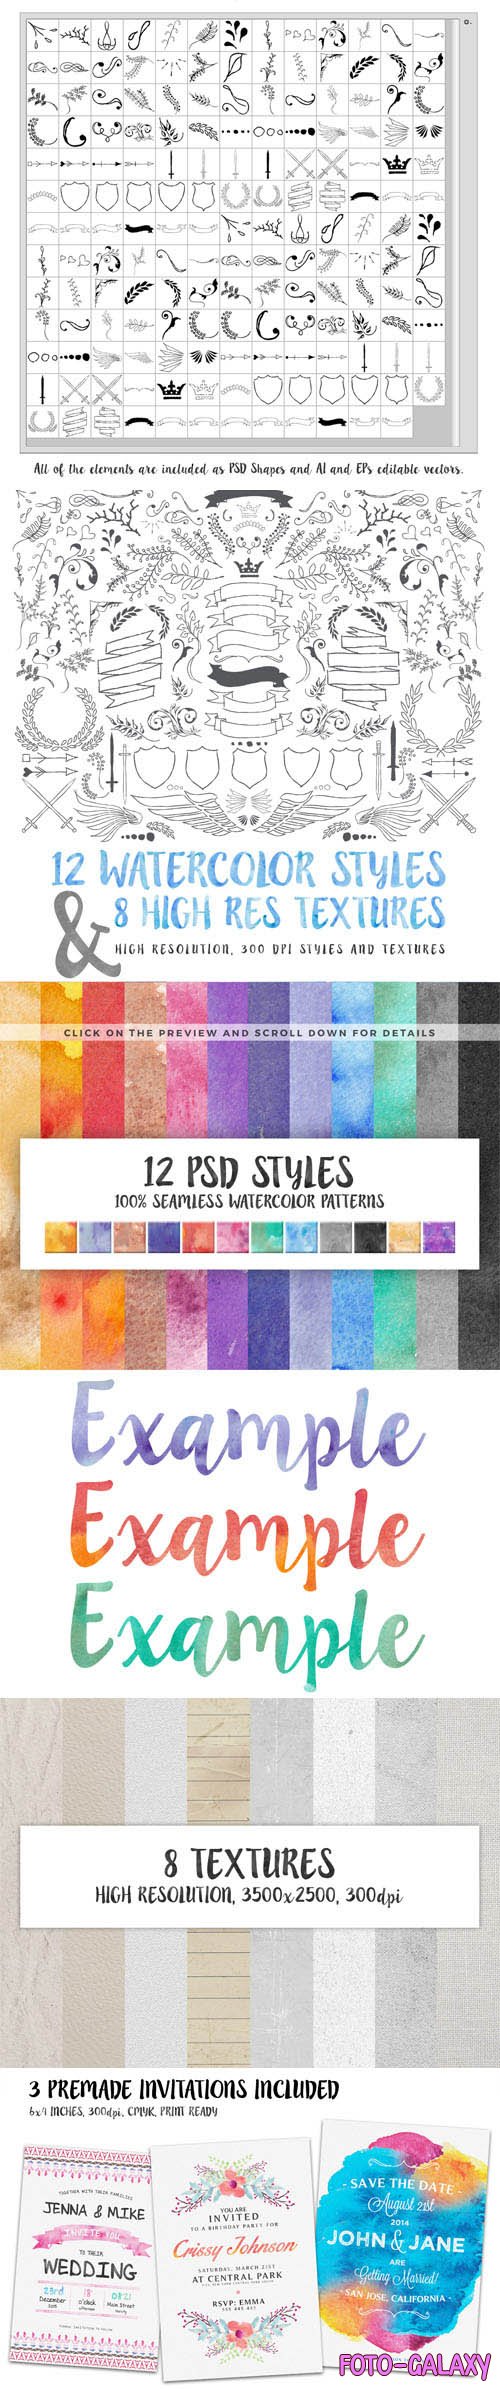 Watercolor Handmade Design Toolkit [300+ Elements] for Photoshop & Illustrator